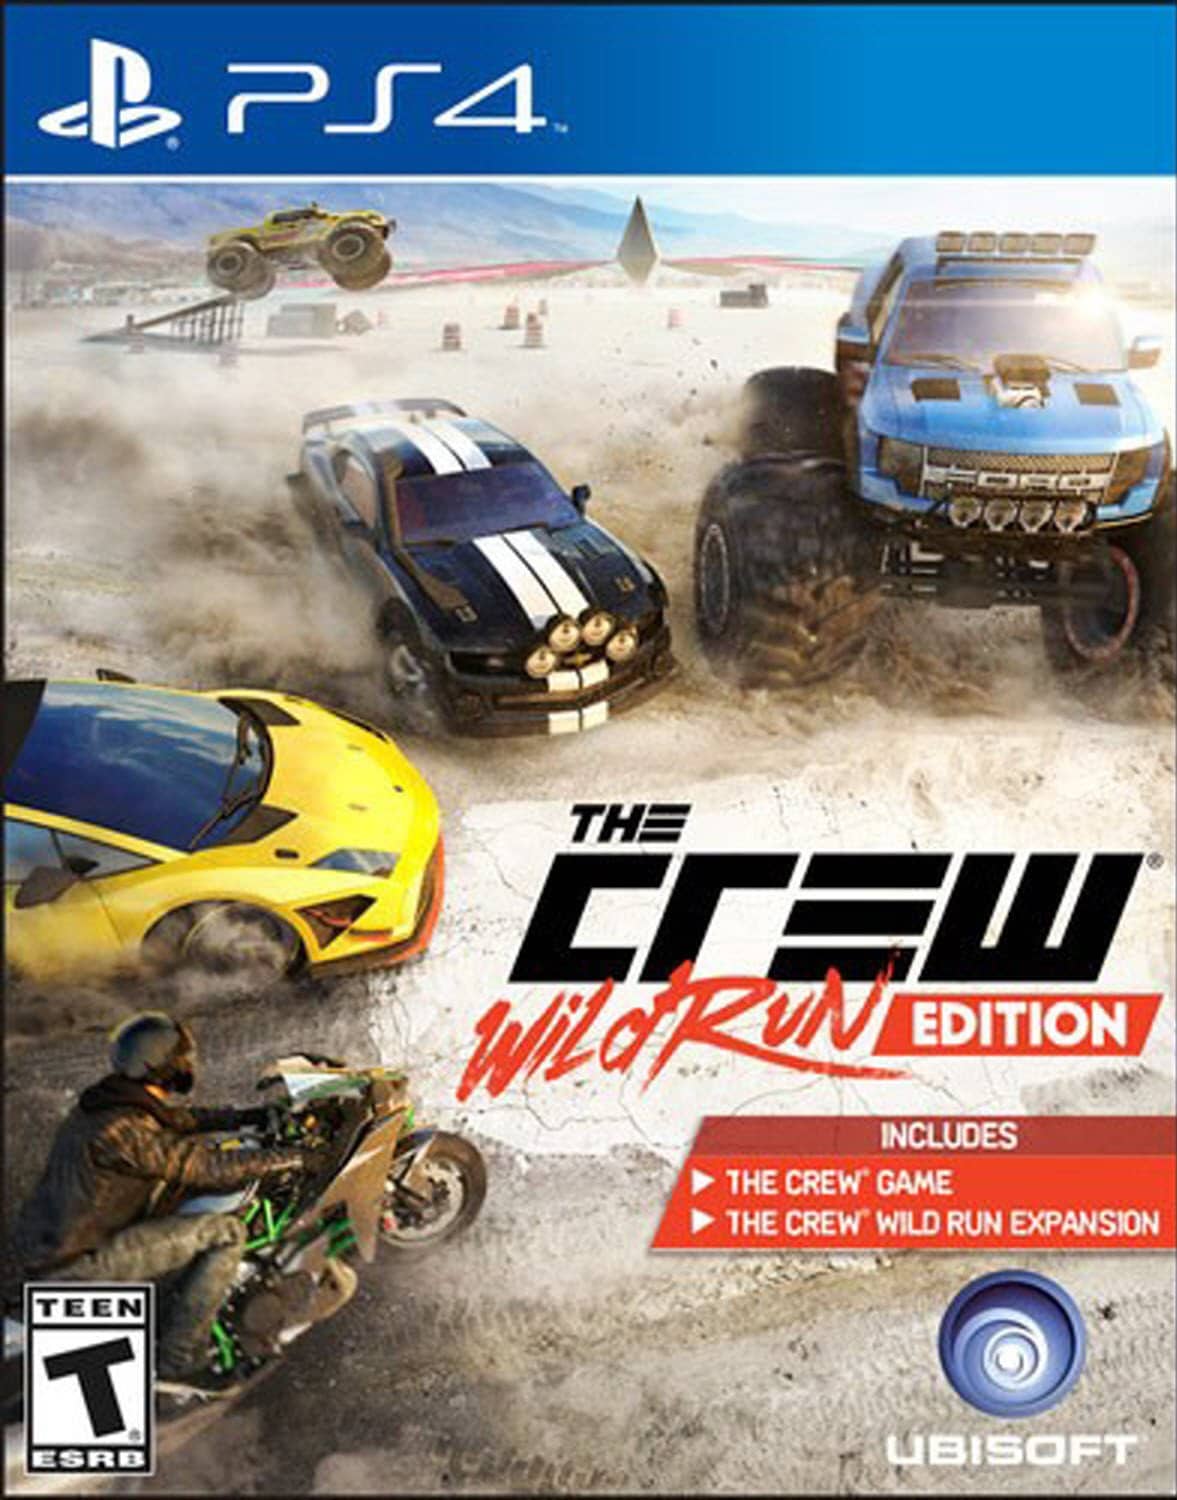 The Crew Wild Run Edition - PlayStation 4